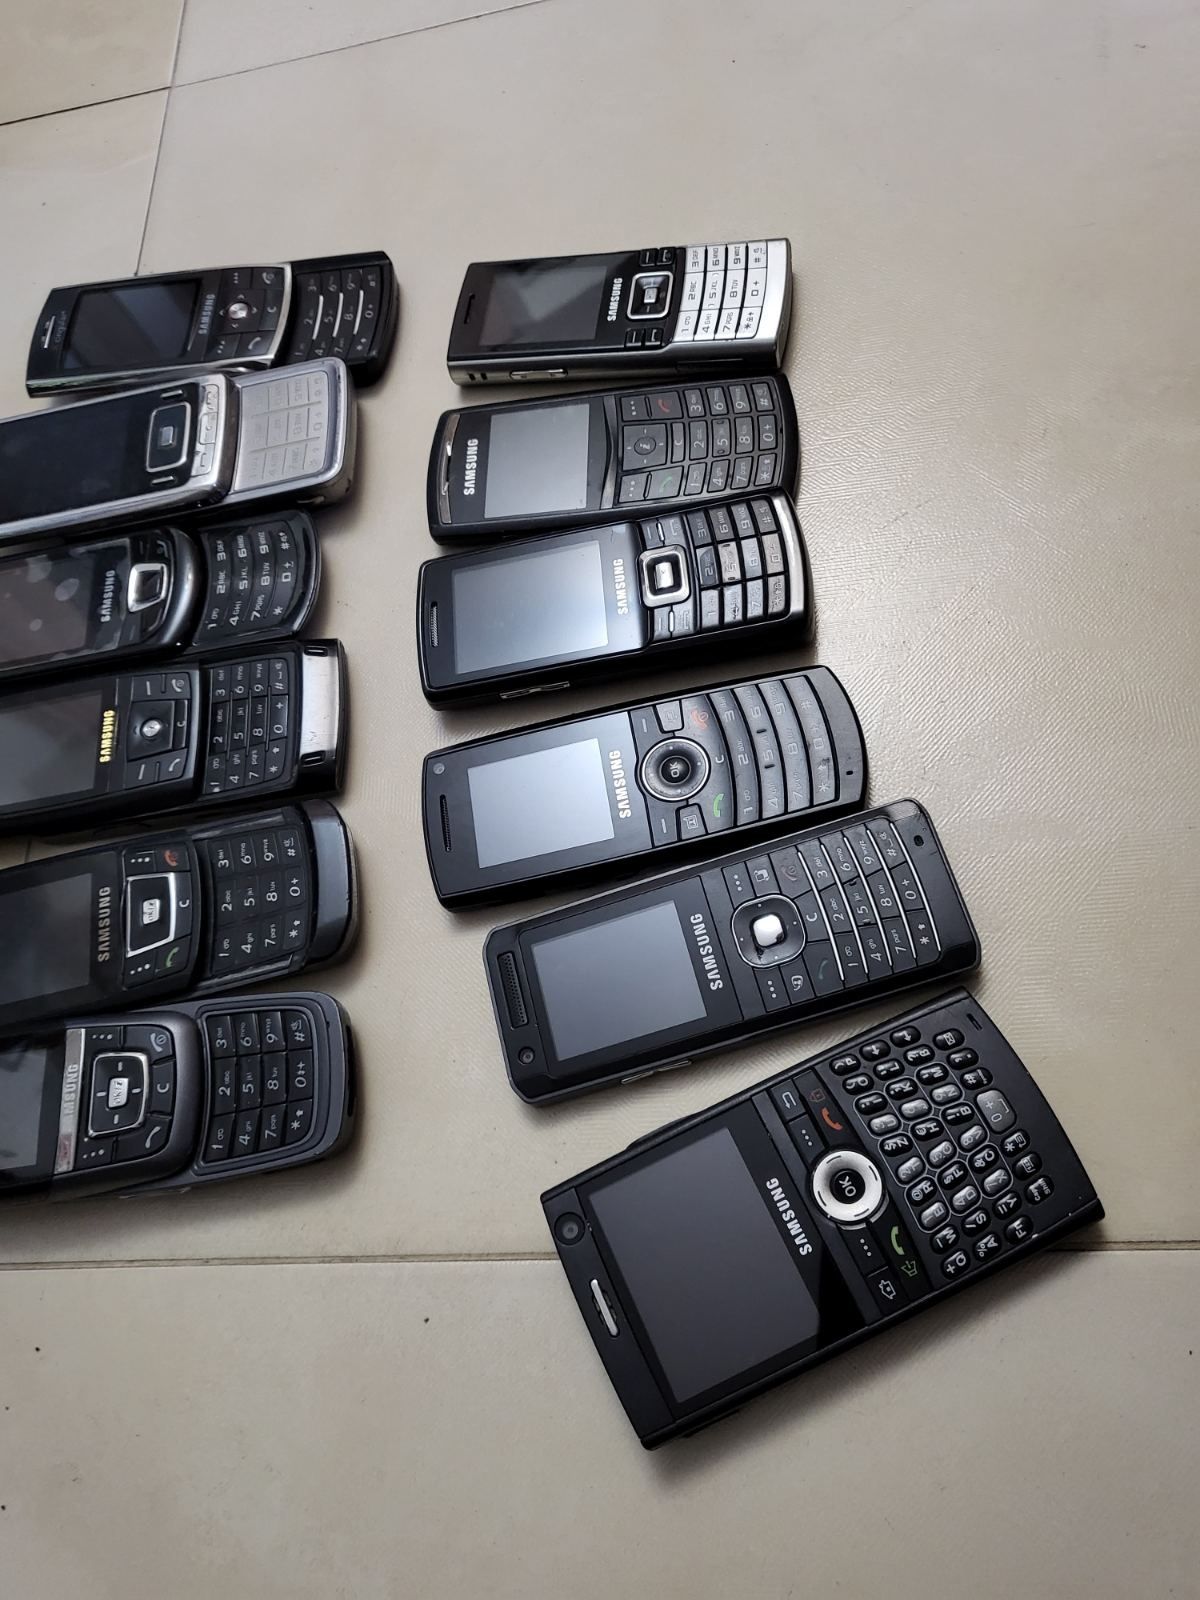 Самсунг/Samsung Z540,S8500,D600,D900,D820,E2550,G800,D807,i600,Z150